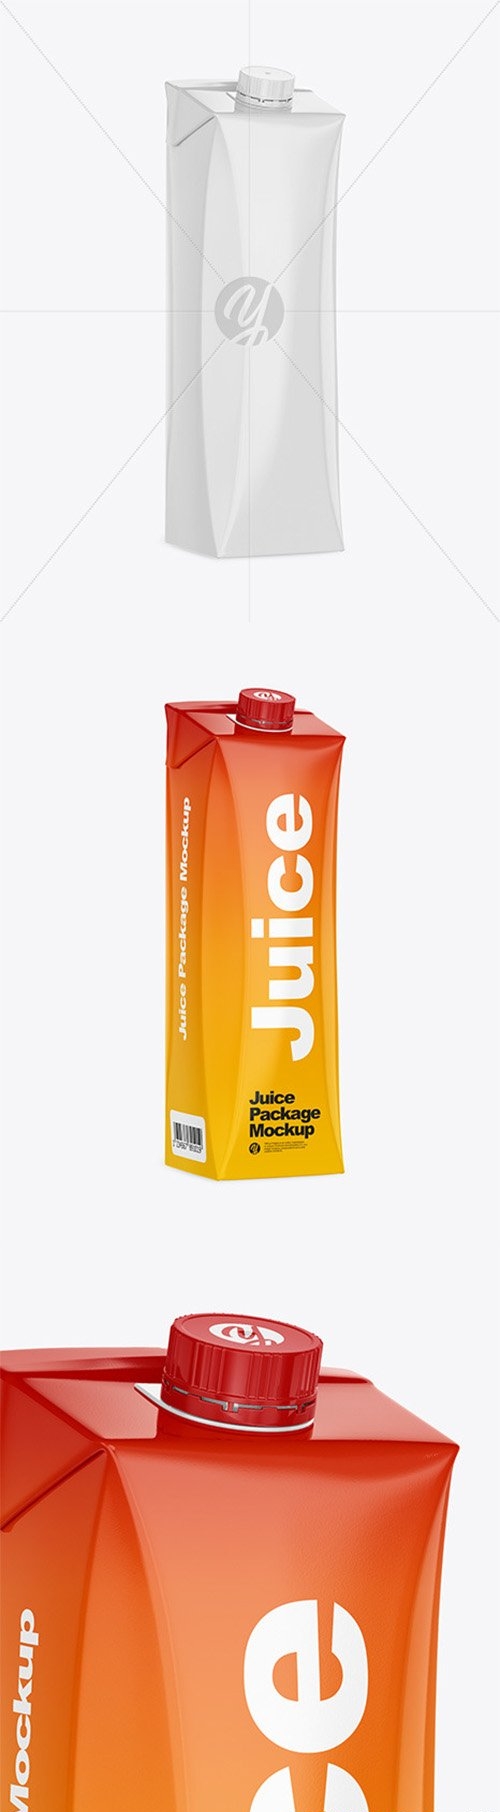 Glossy Juice Carton Package Mockup 59566